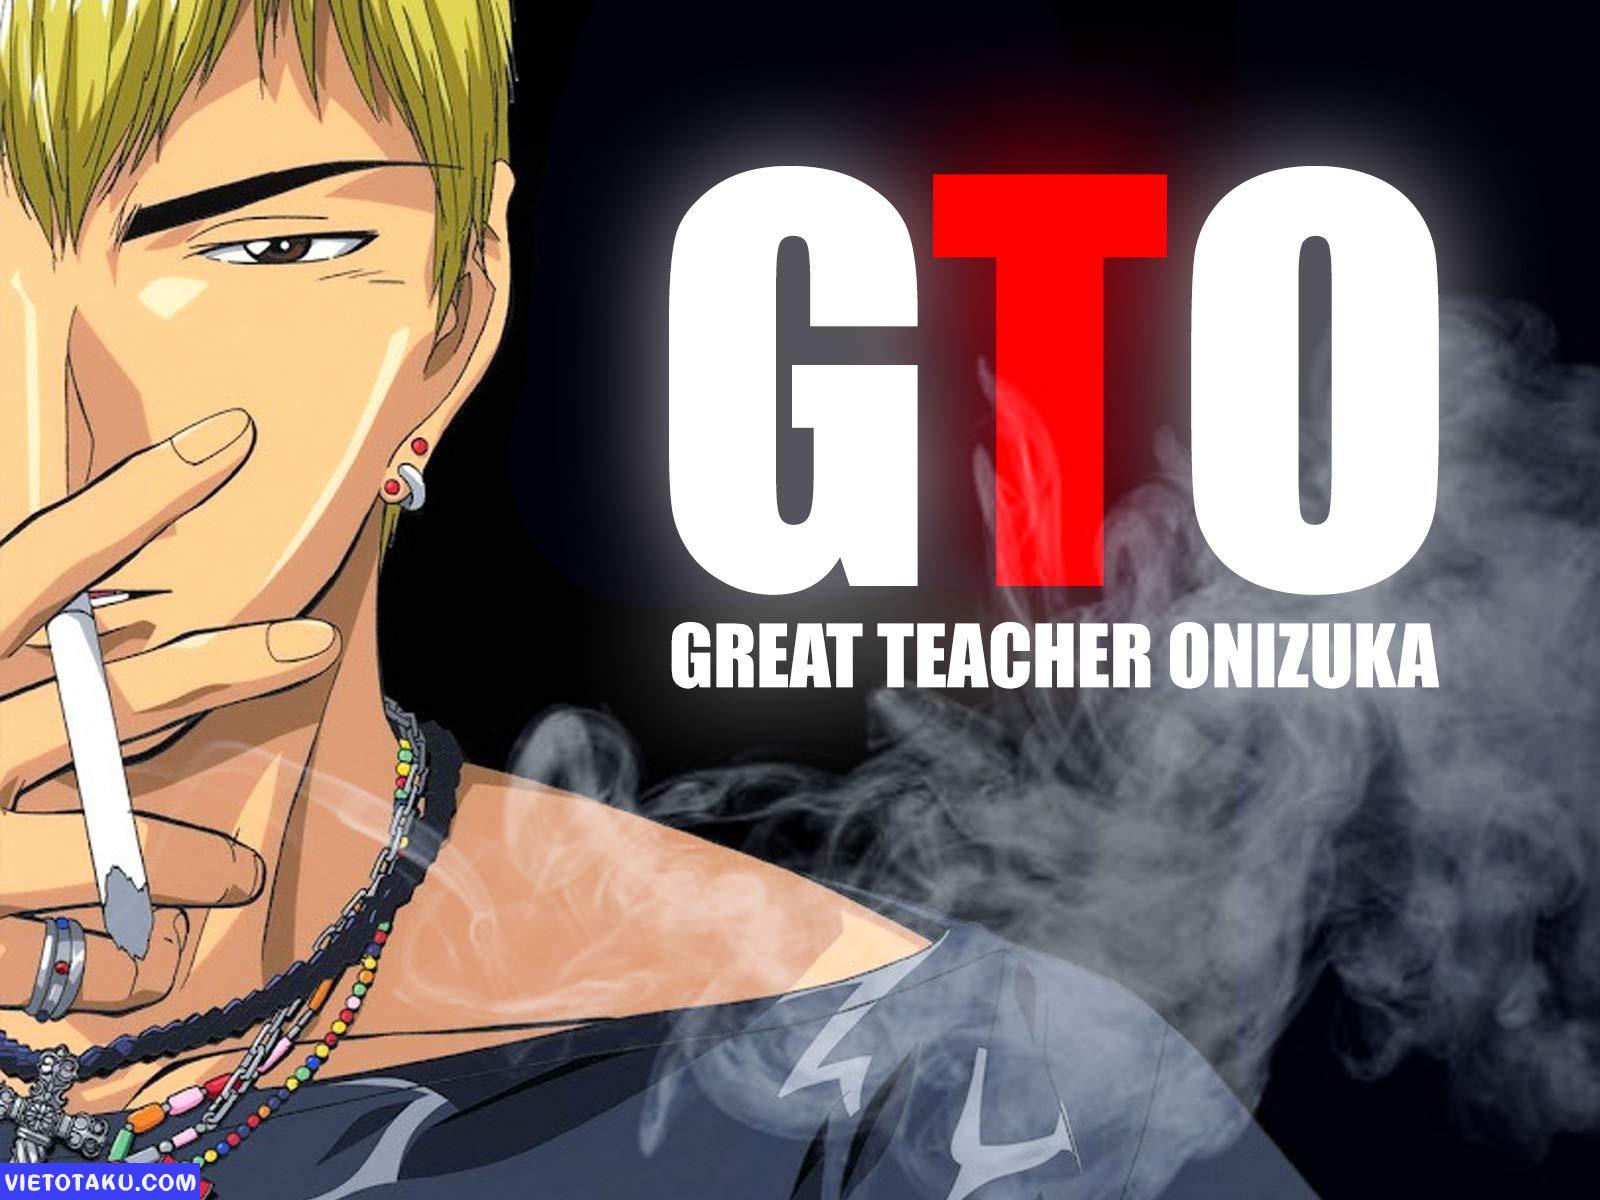 Great Teacher Onizuka - Wikipedia